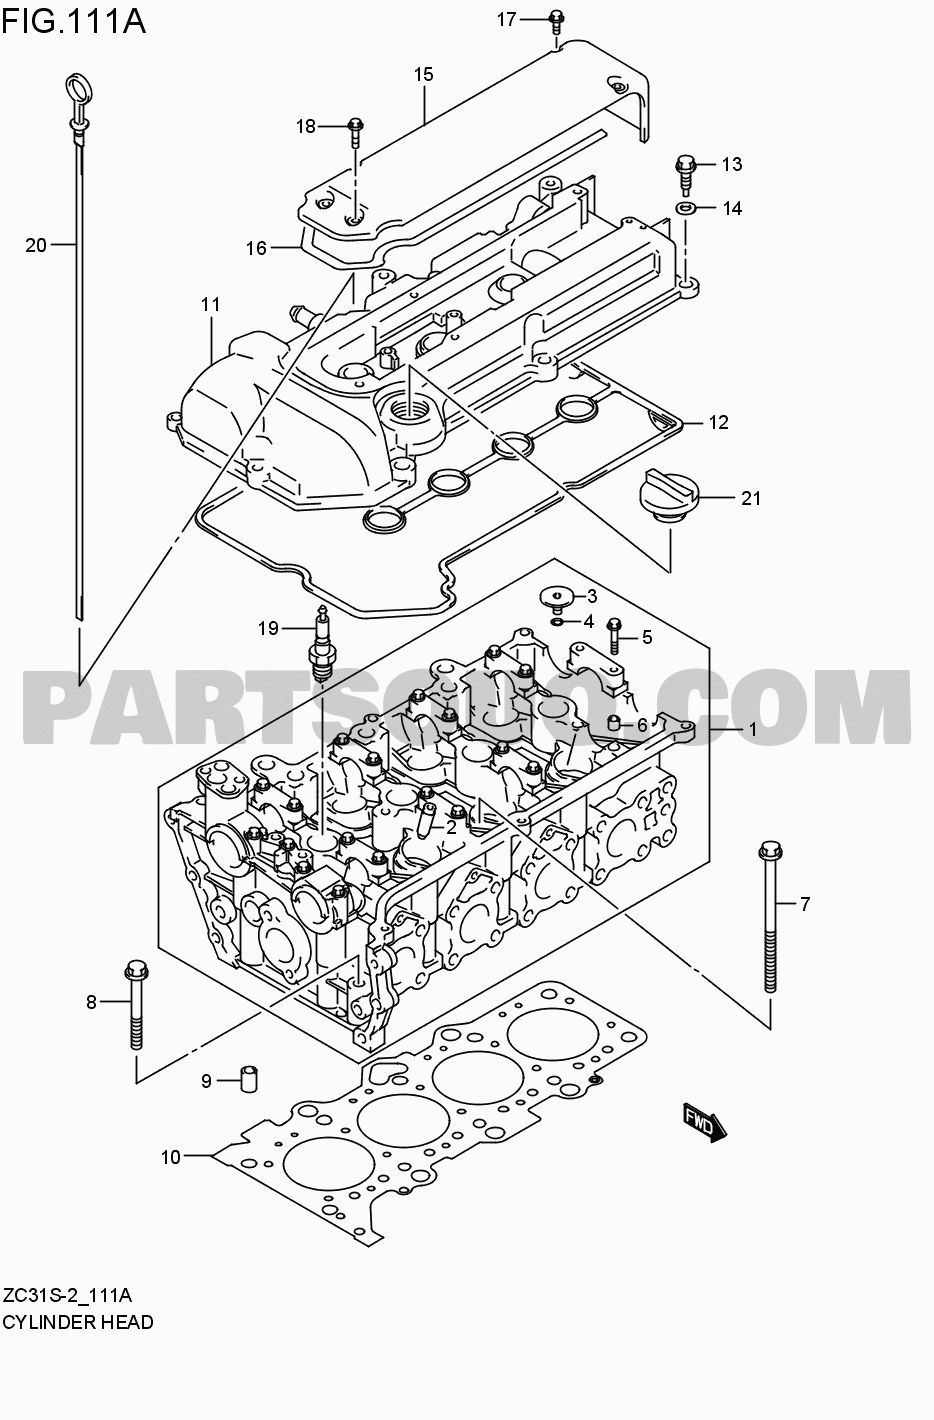 Engine / Fuel tank | Suzuki Kei/Swift ZC31S-2 200704 | Parts 